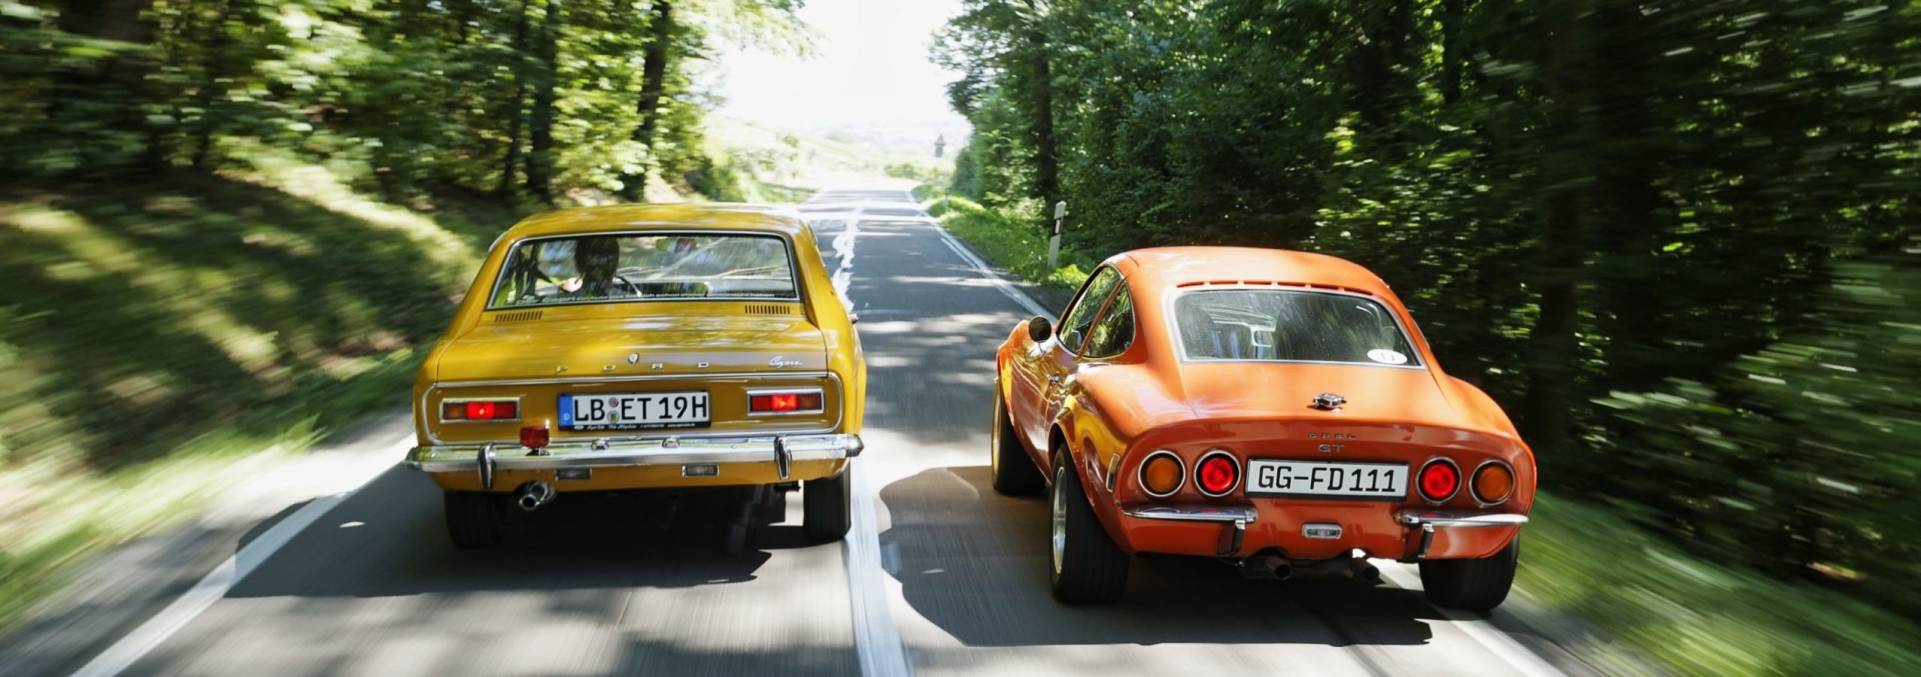 Ford Capri und Opel GT